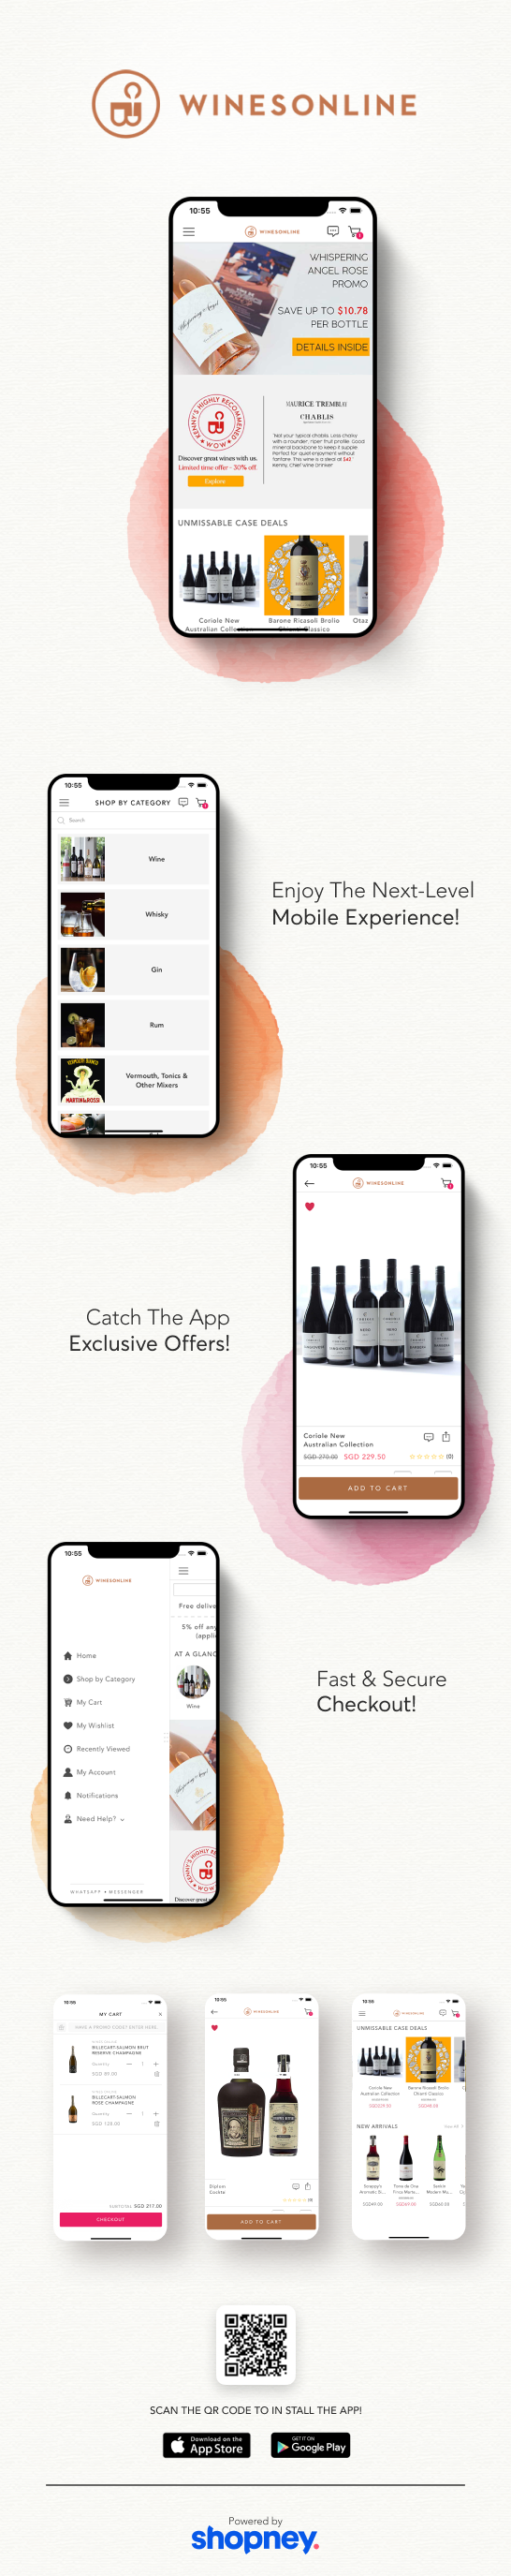 the mobile app design of Wines Online Singapore app